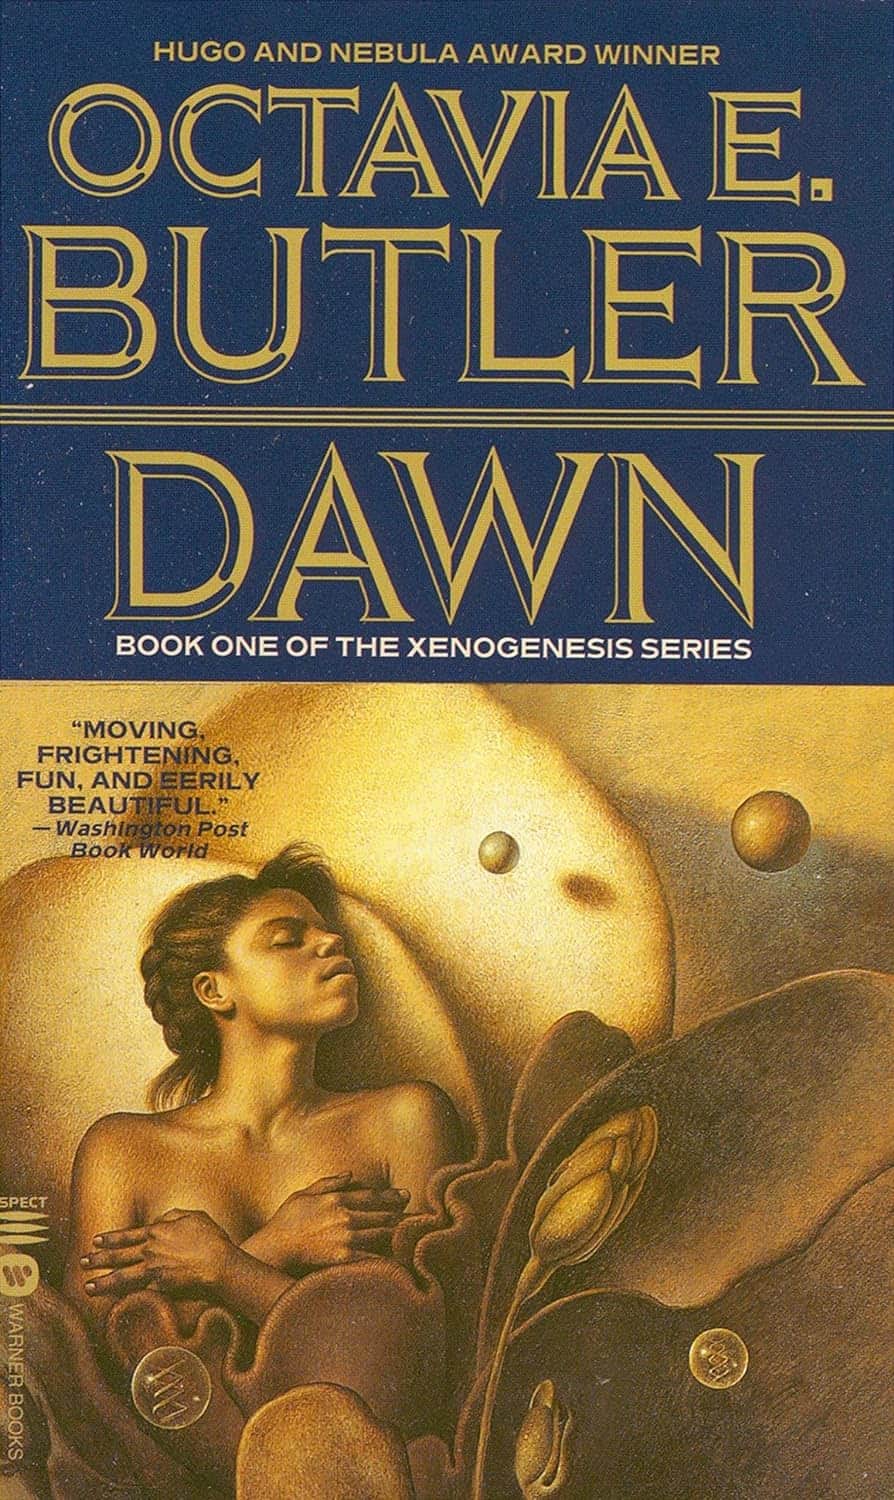 Dawn by Octavia Butler